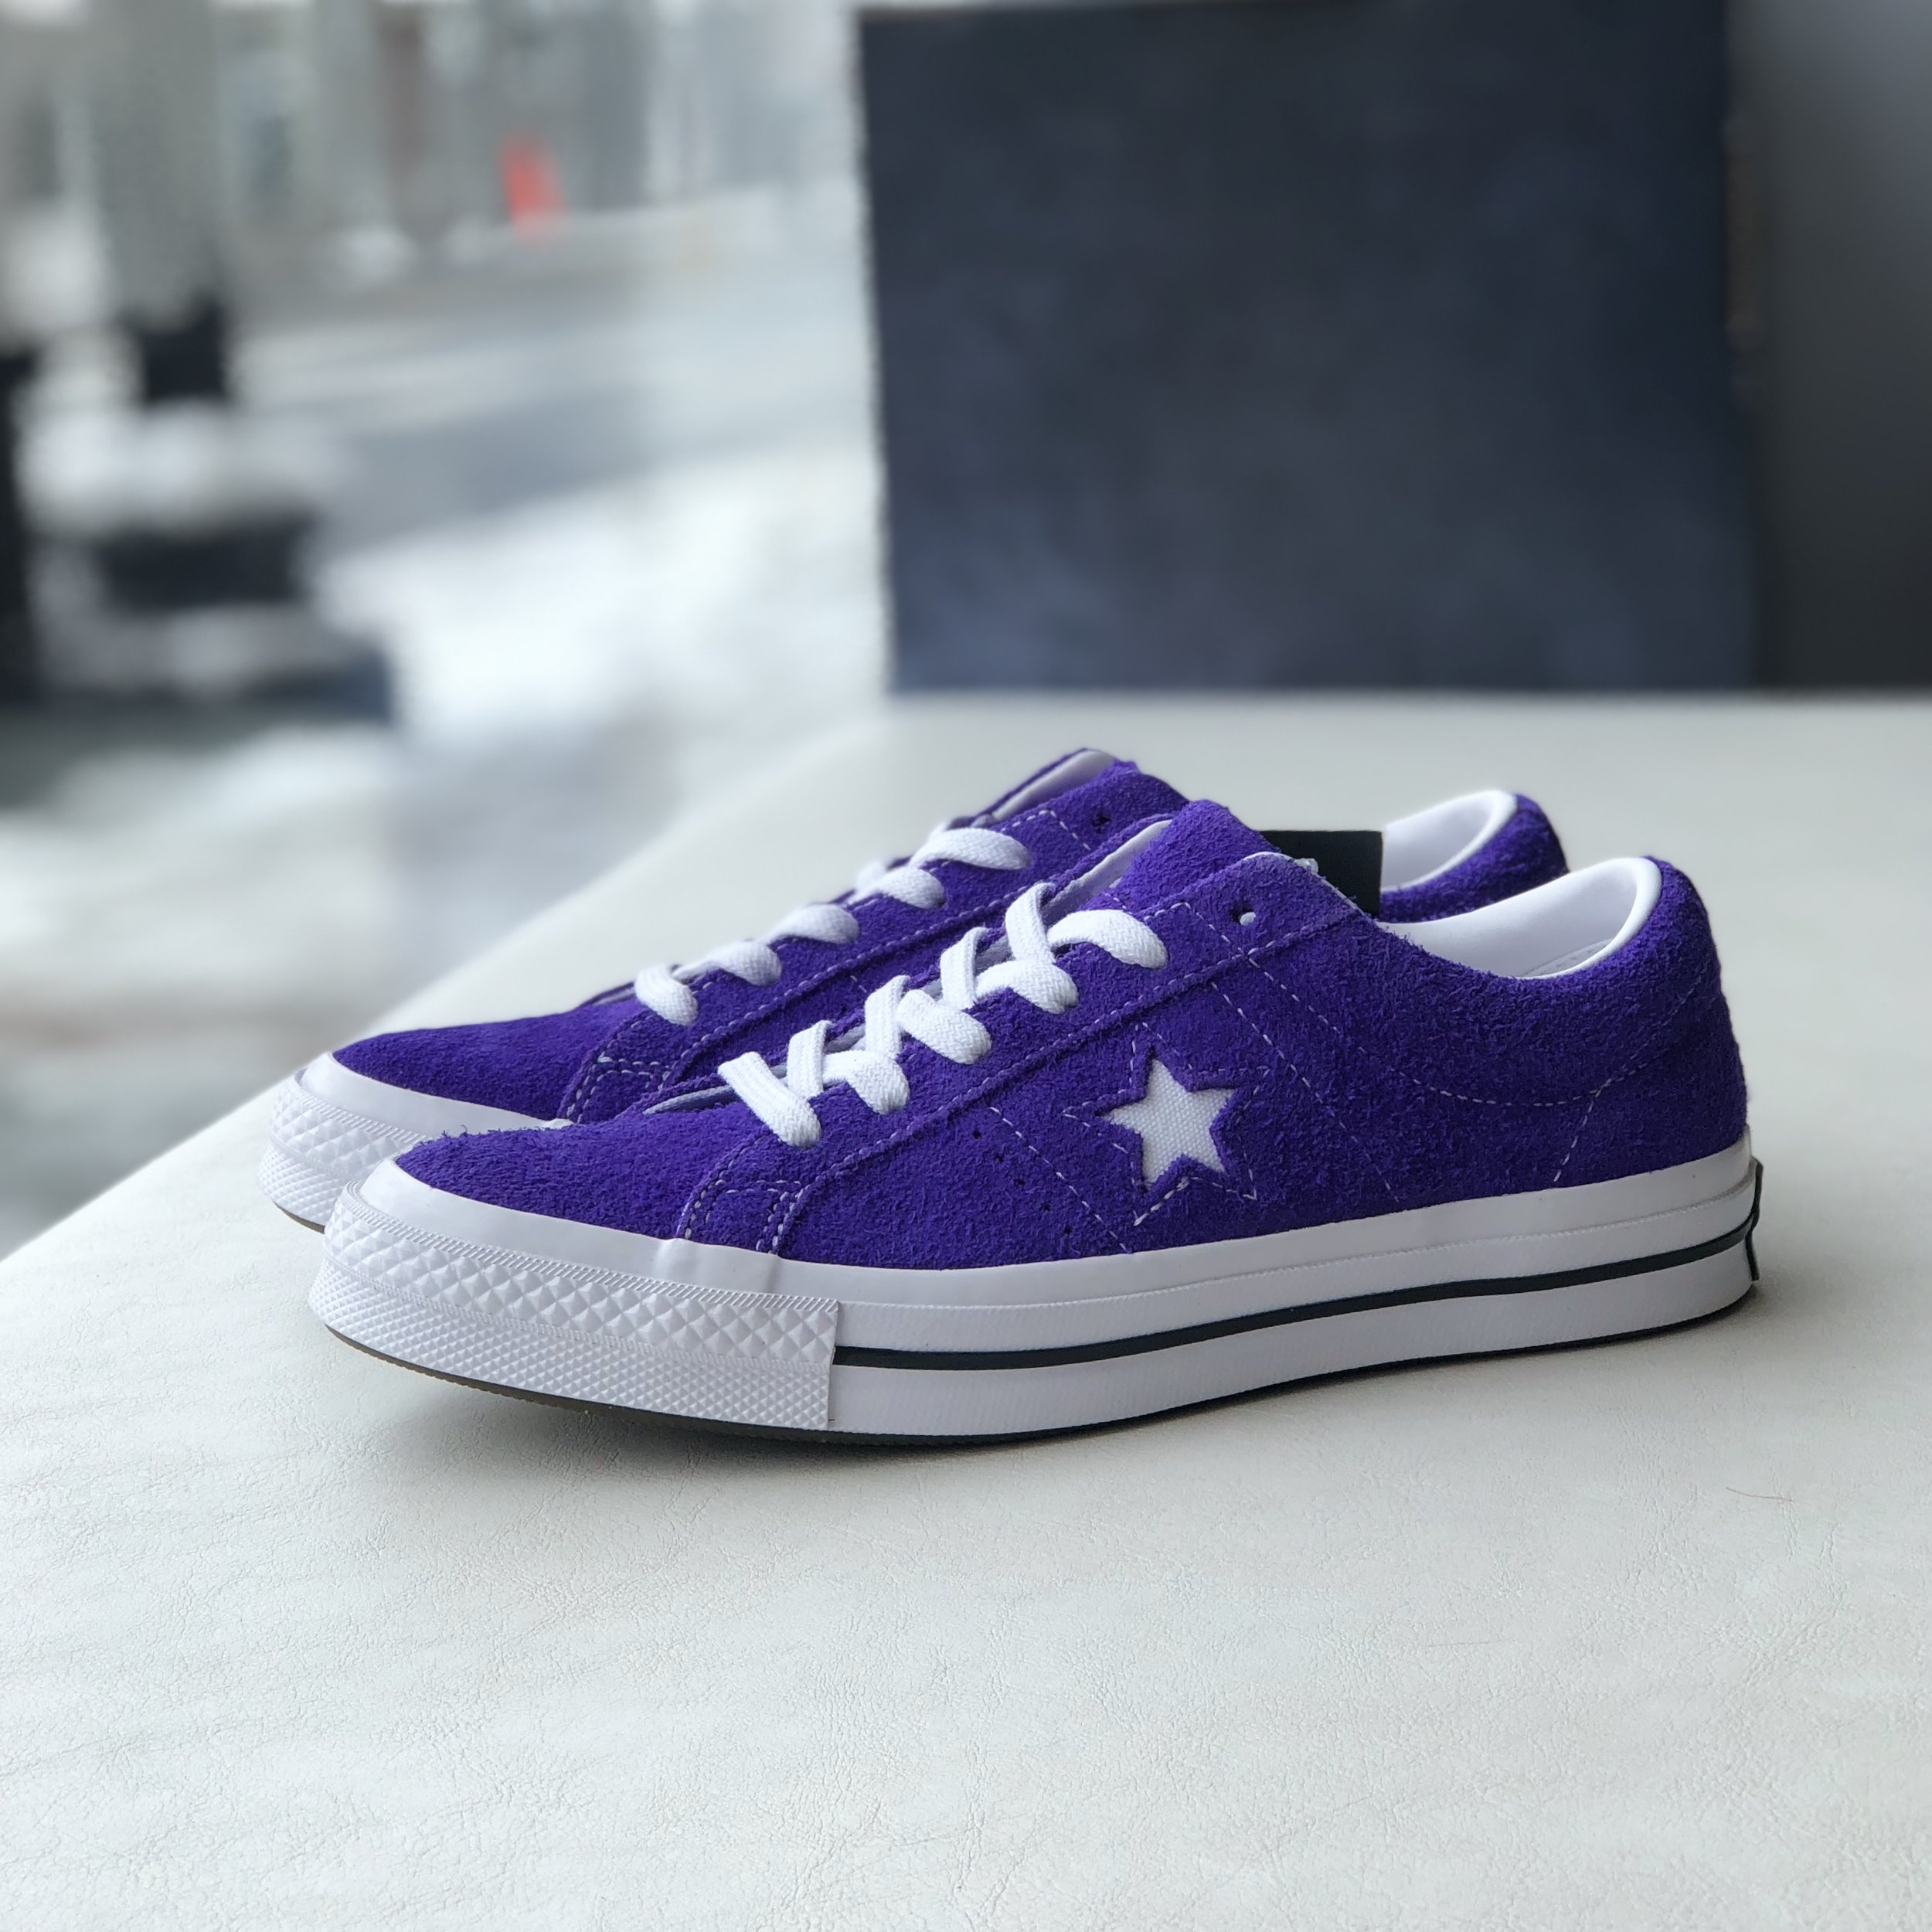 Converse One Star Premium Suede Low in Court Purple — MAJOR